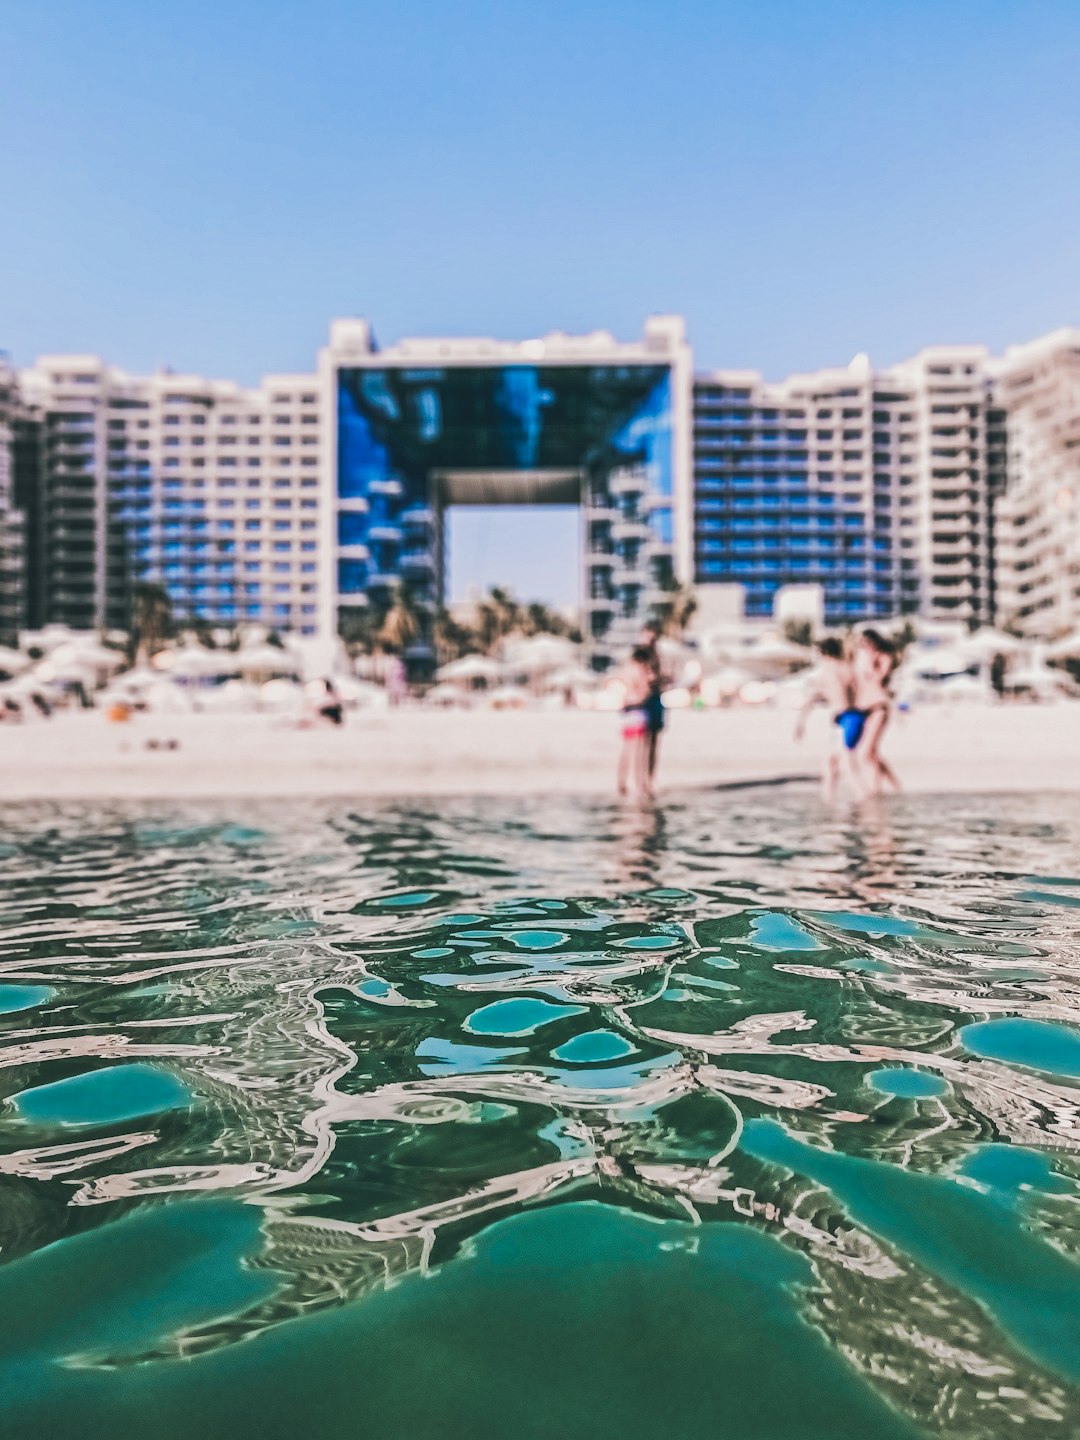 Resort photo spot Dubai Marina - Dubai - United Arab Emirates Sharjah